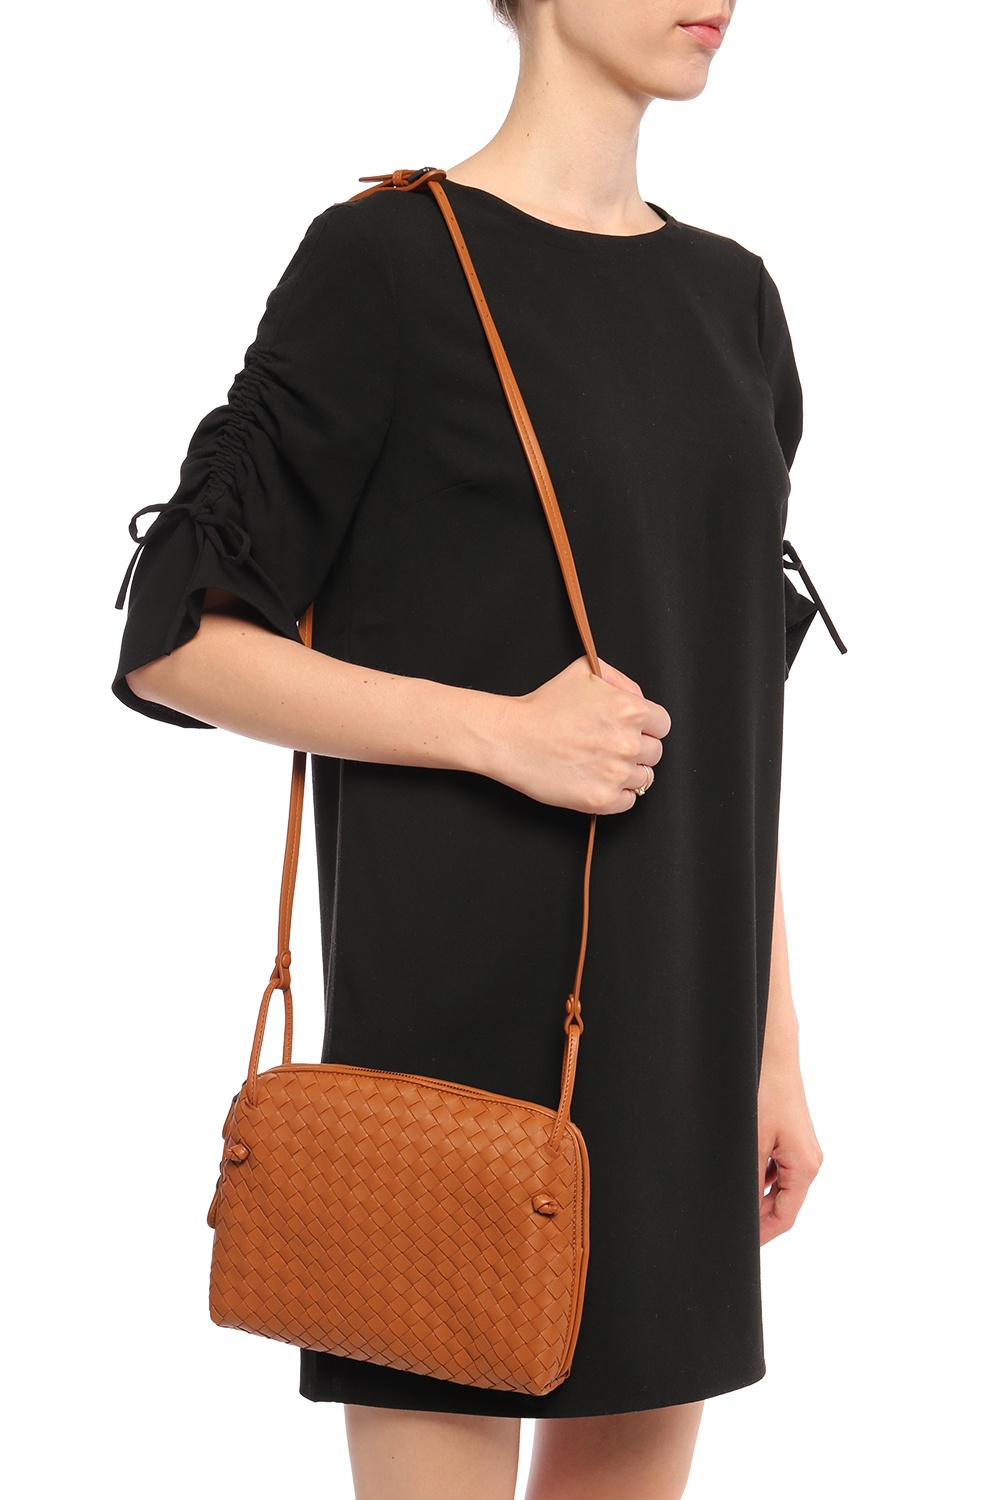 Bottega Veneta Beige Intrecciato Leather Nodini Crossbody Bag